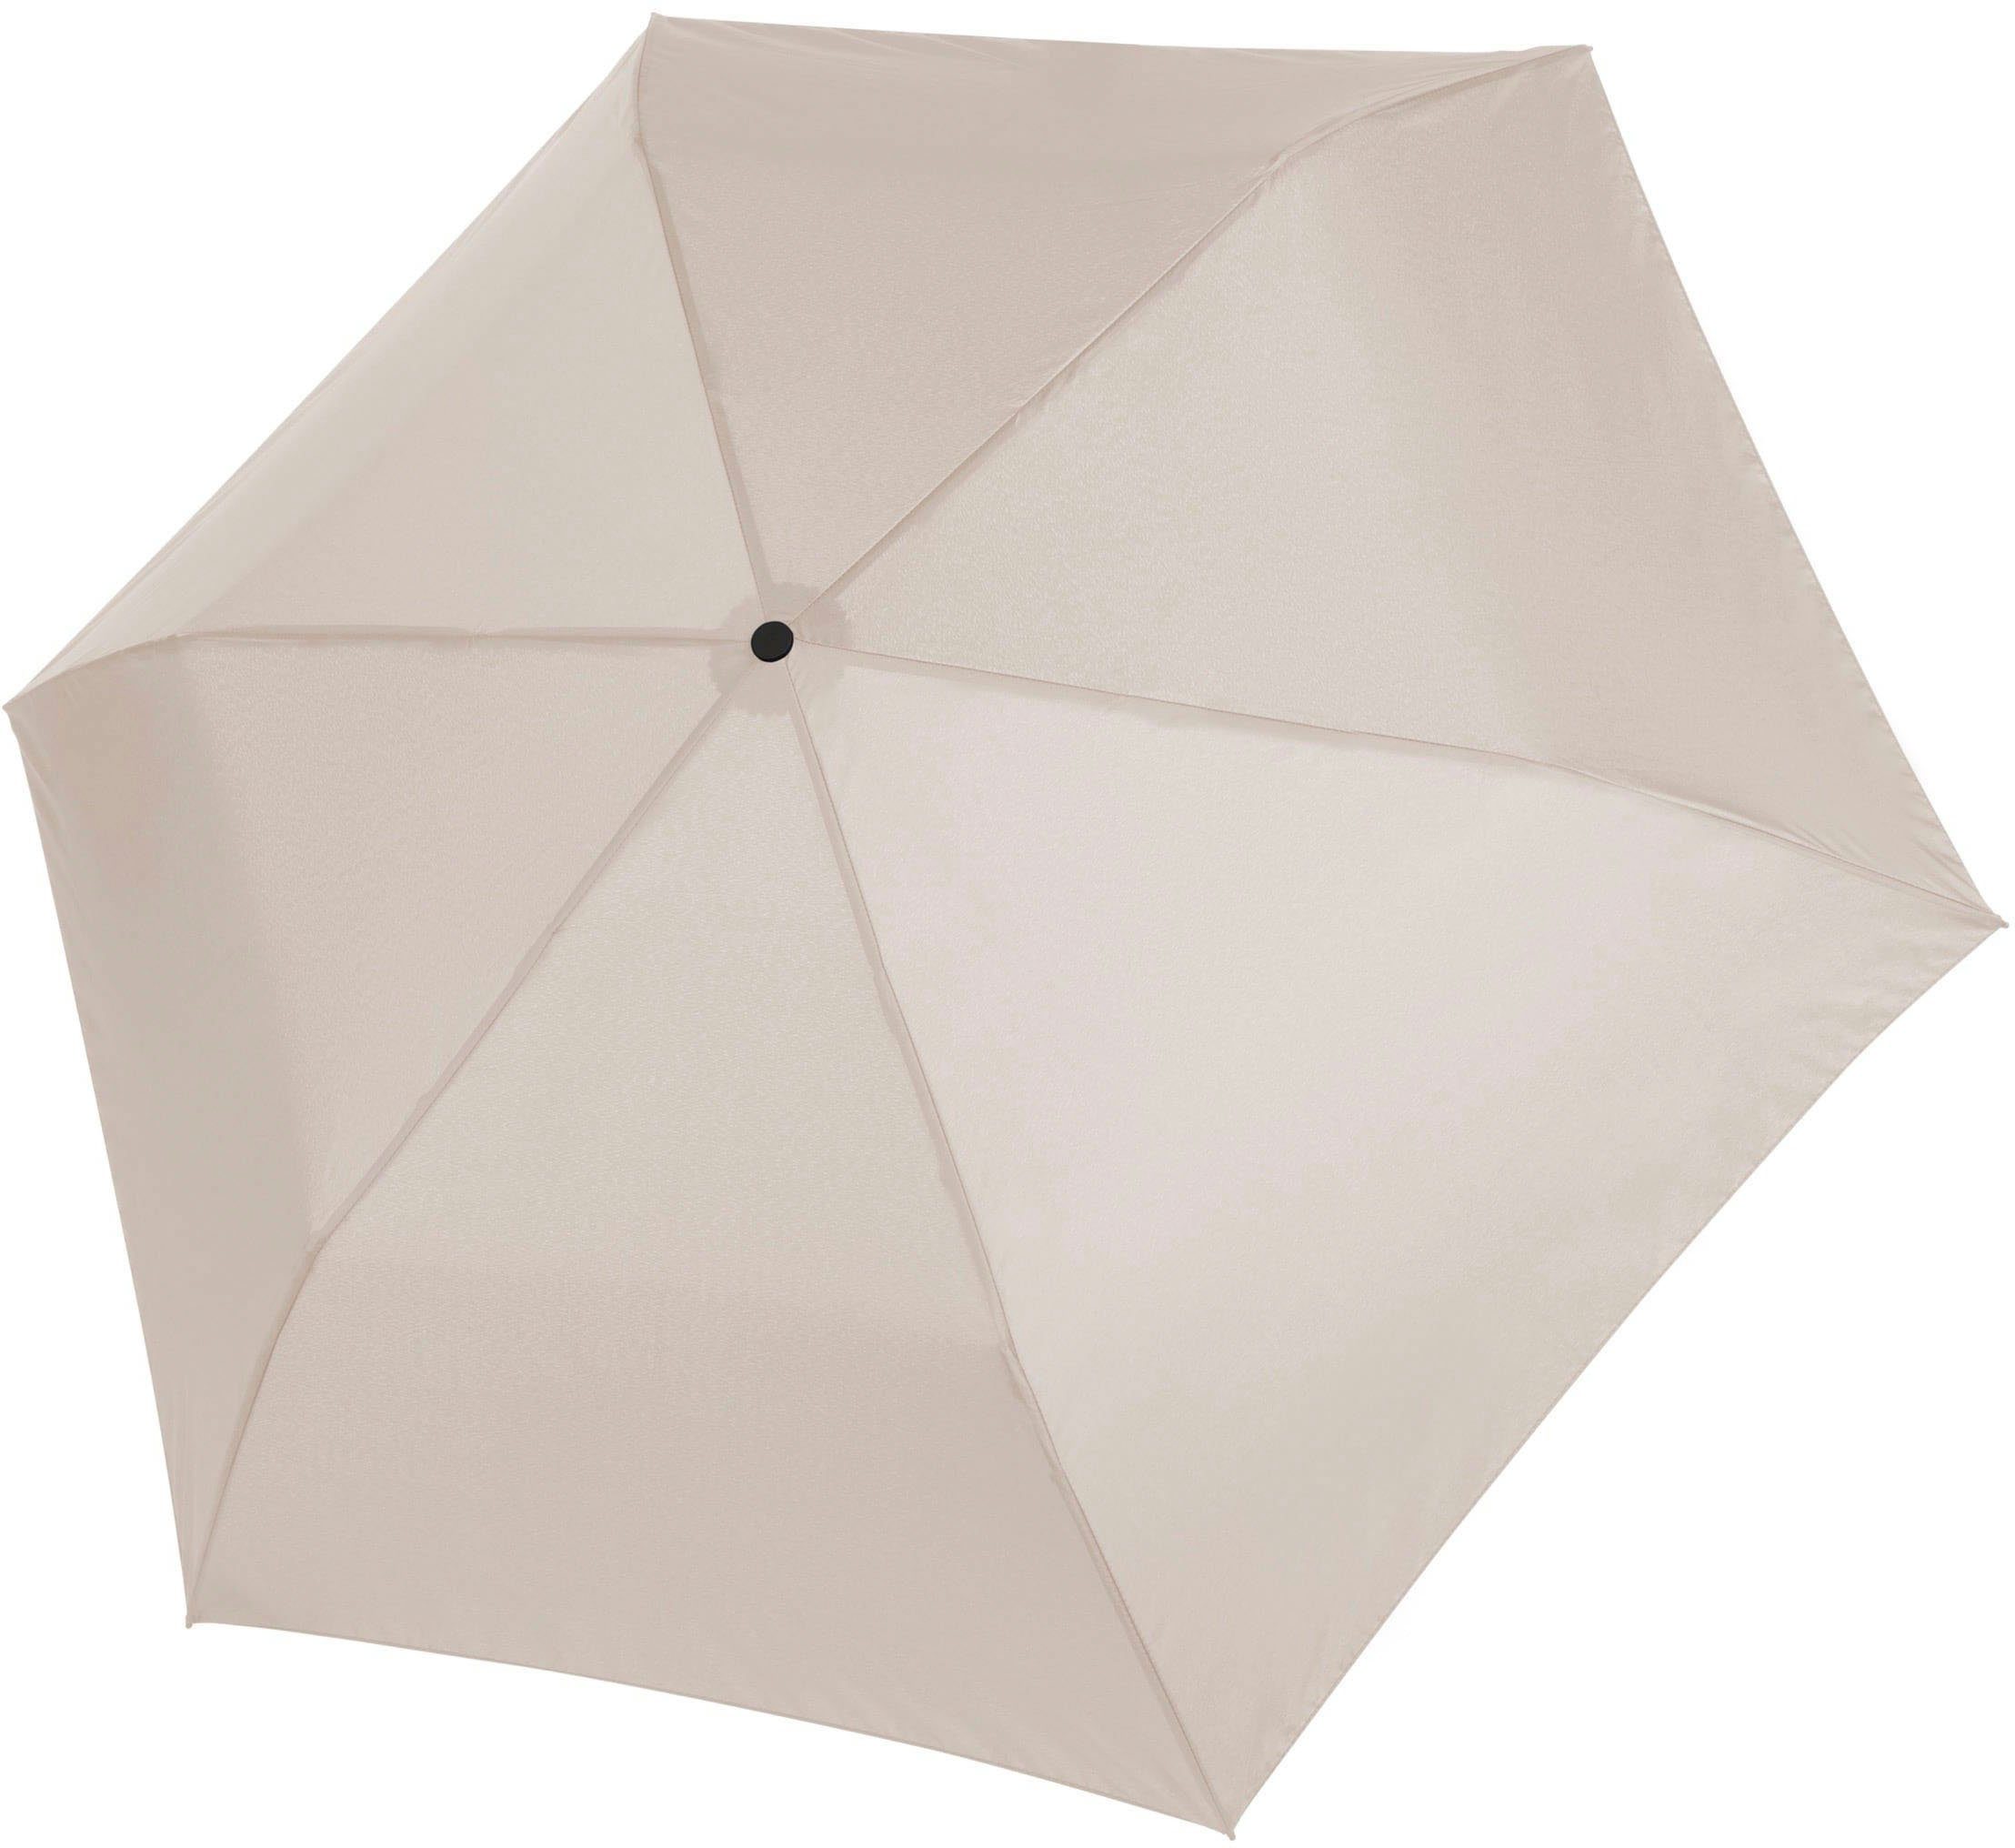 Taschenregenschirm doppler® Magic harmonic beige uni, zero